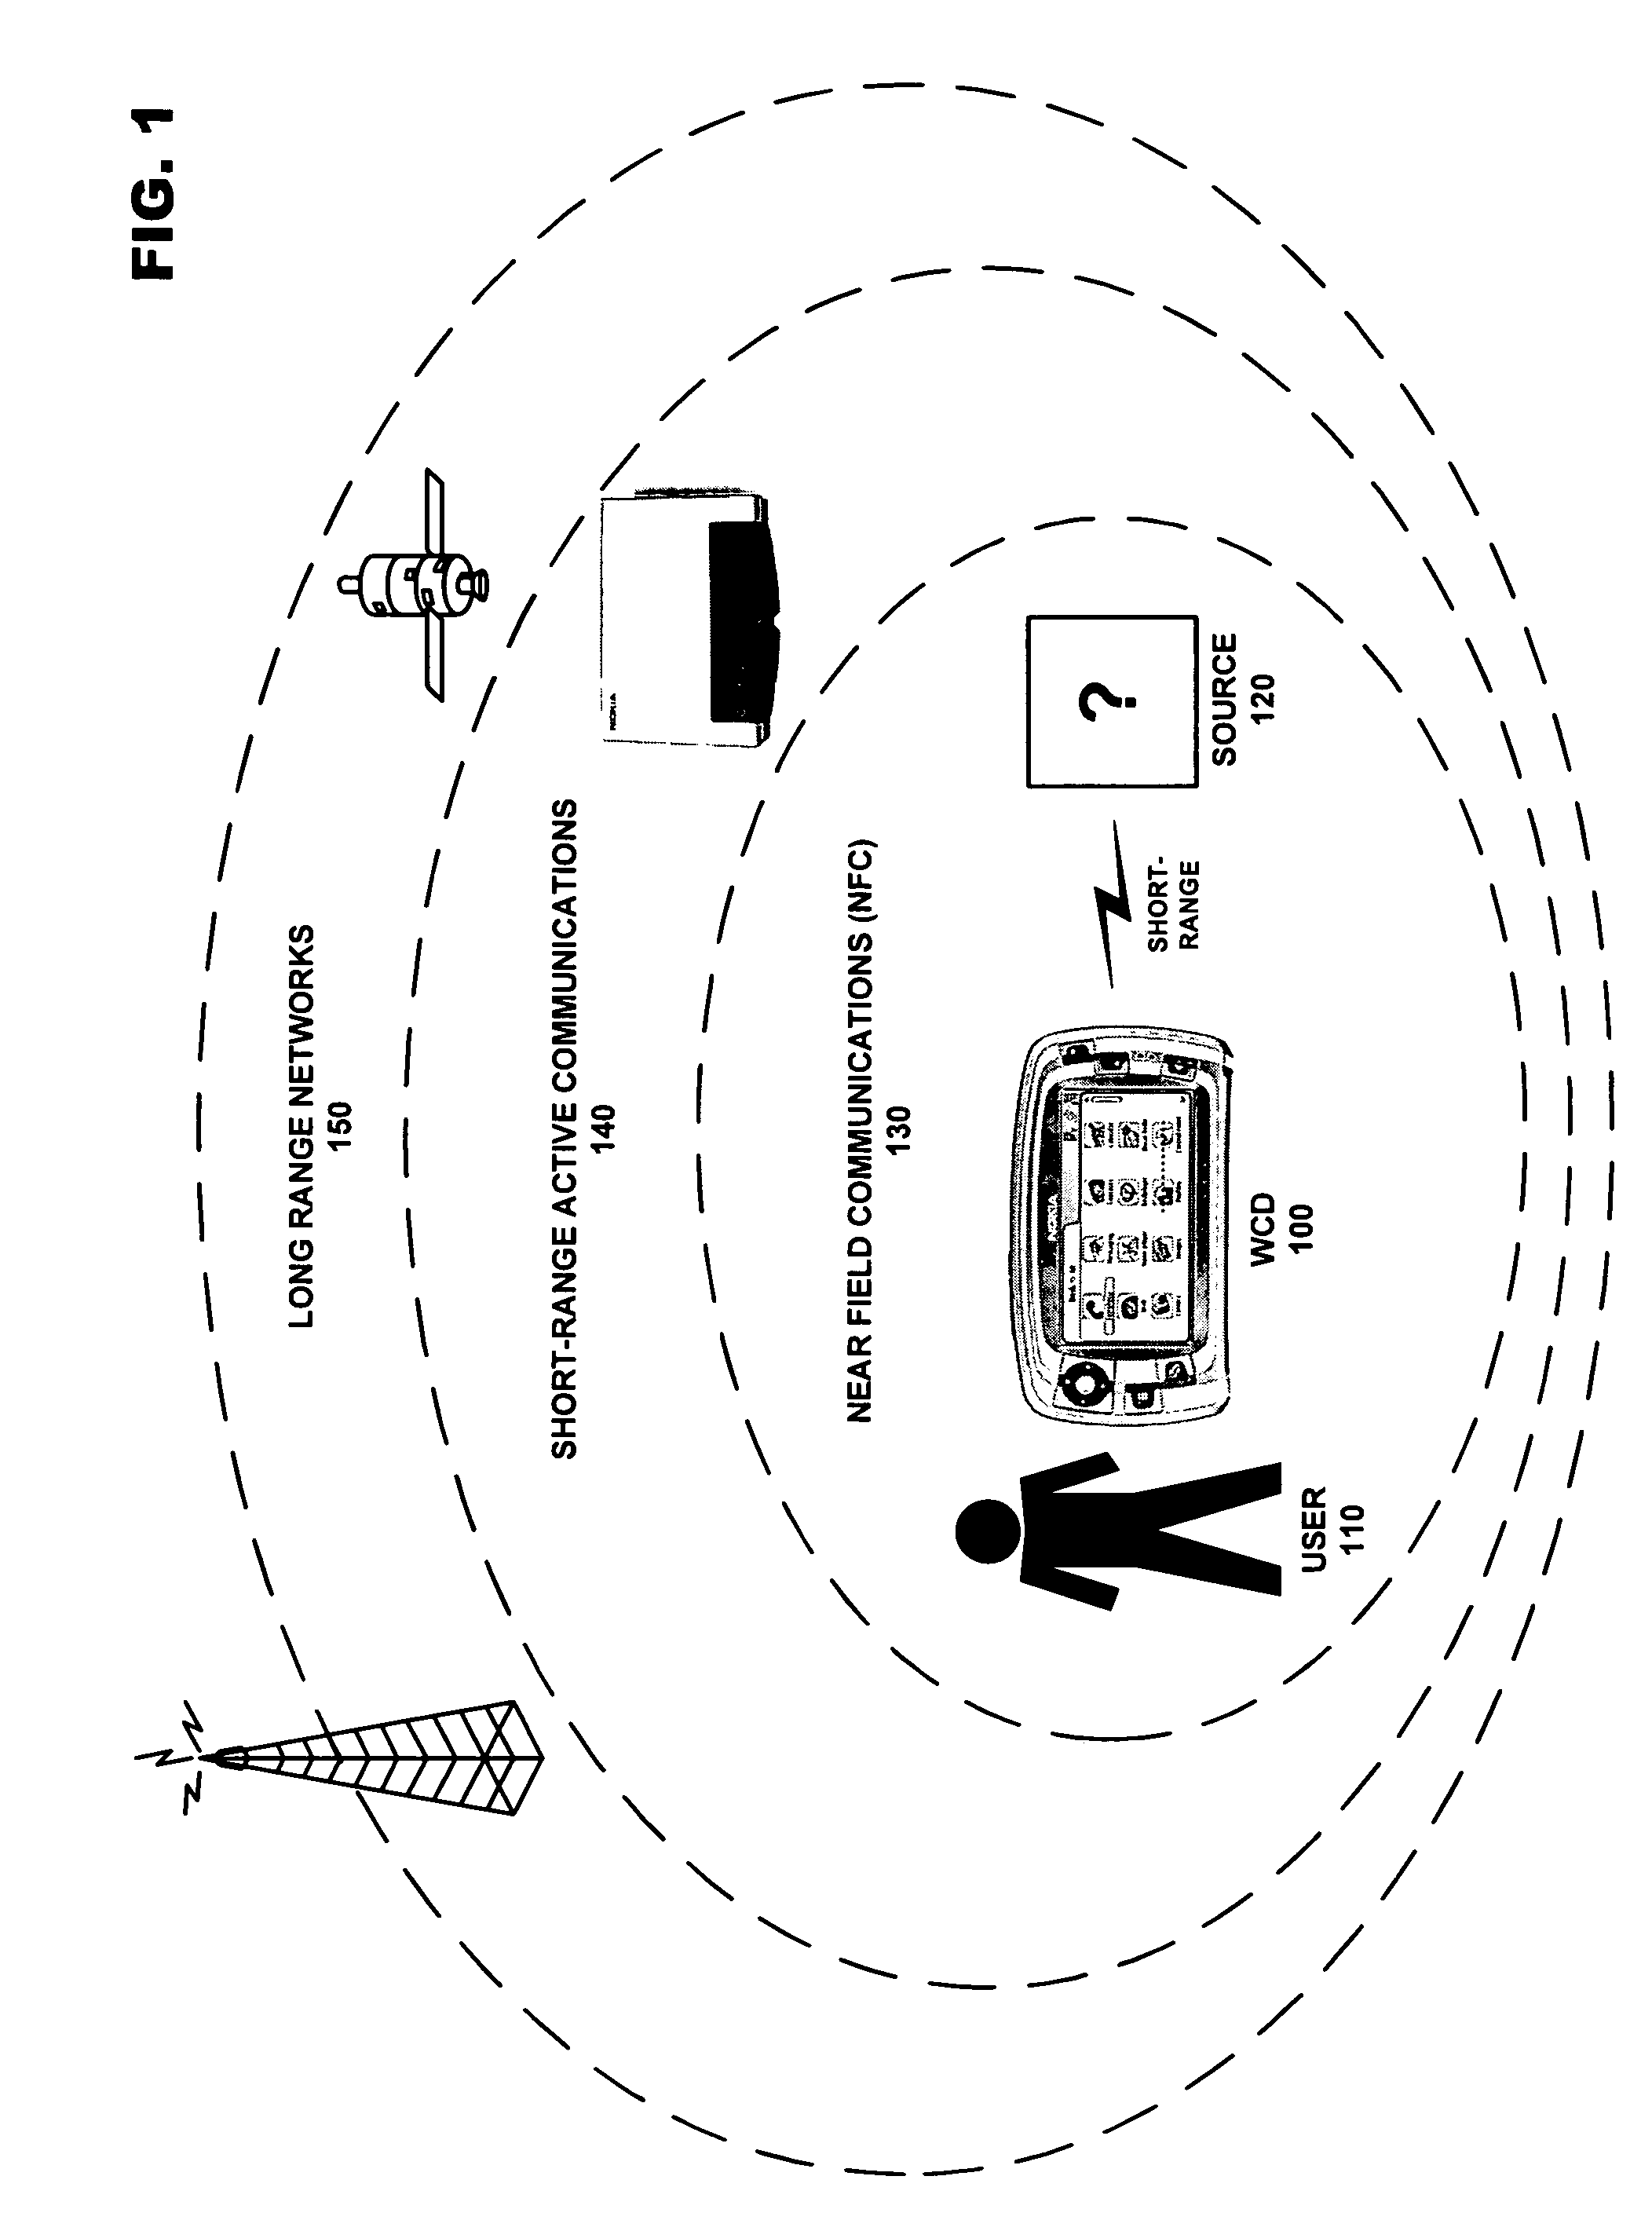 Radio transmission scheduling according to multiradio control in a radio modem